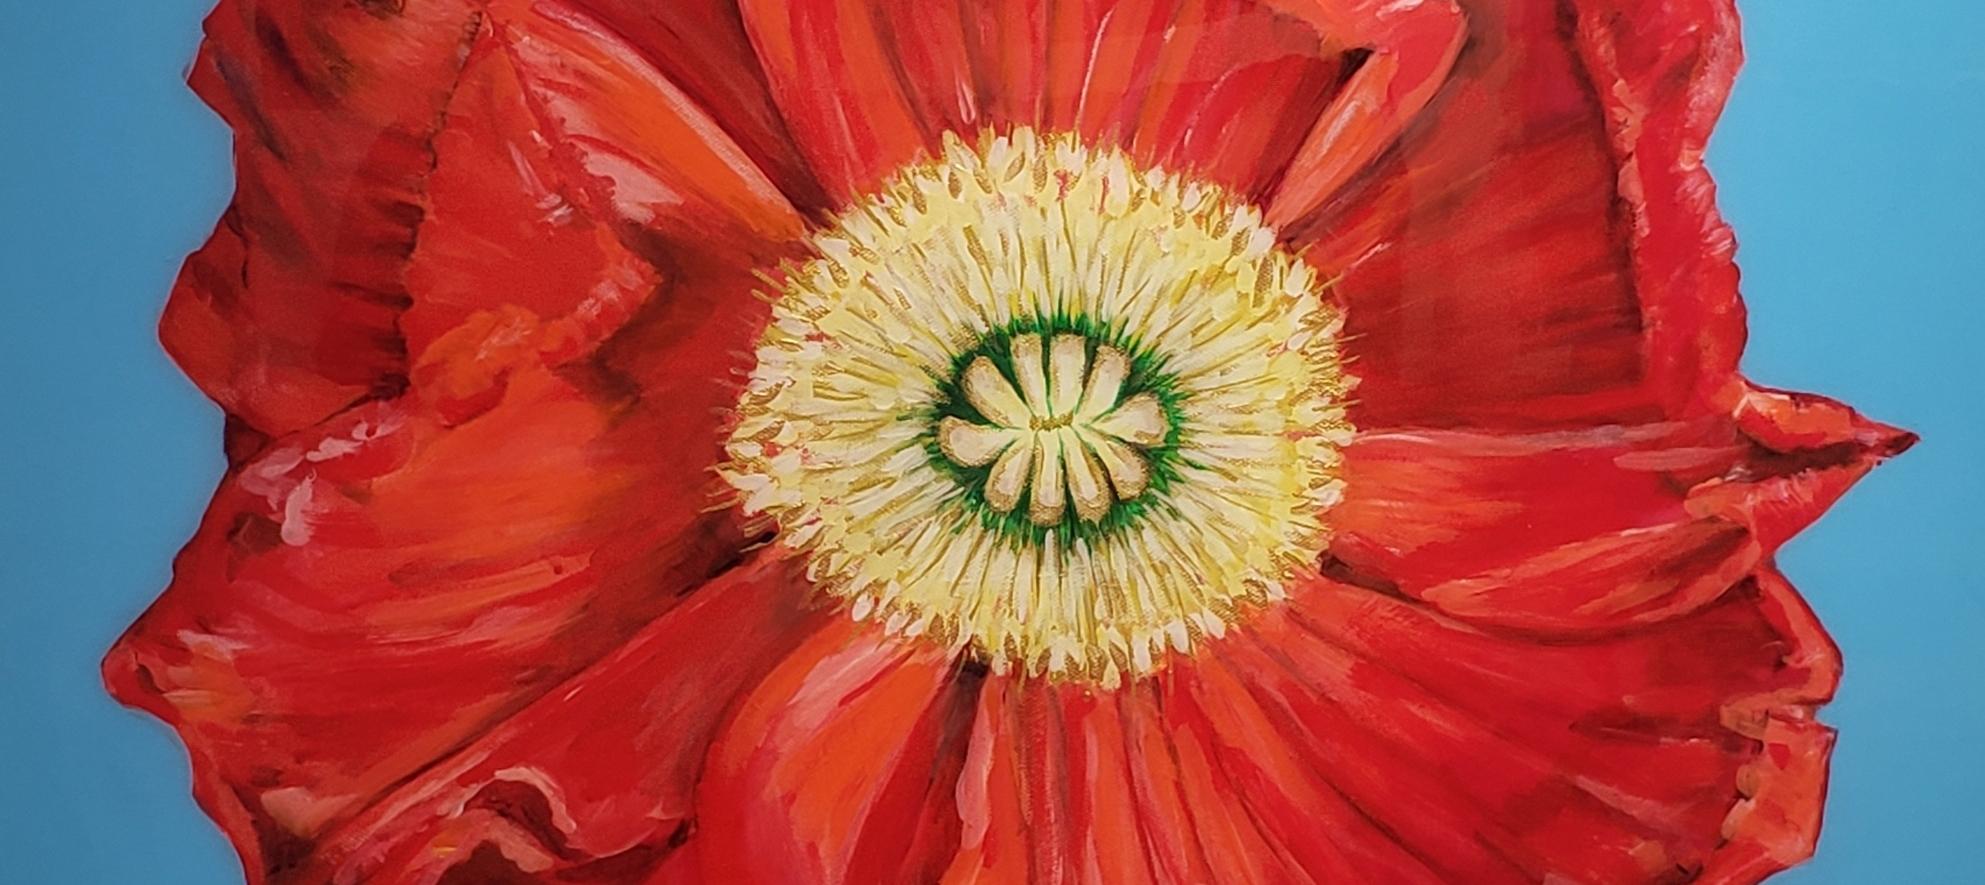 acrylic poppy painting